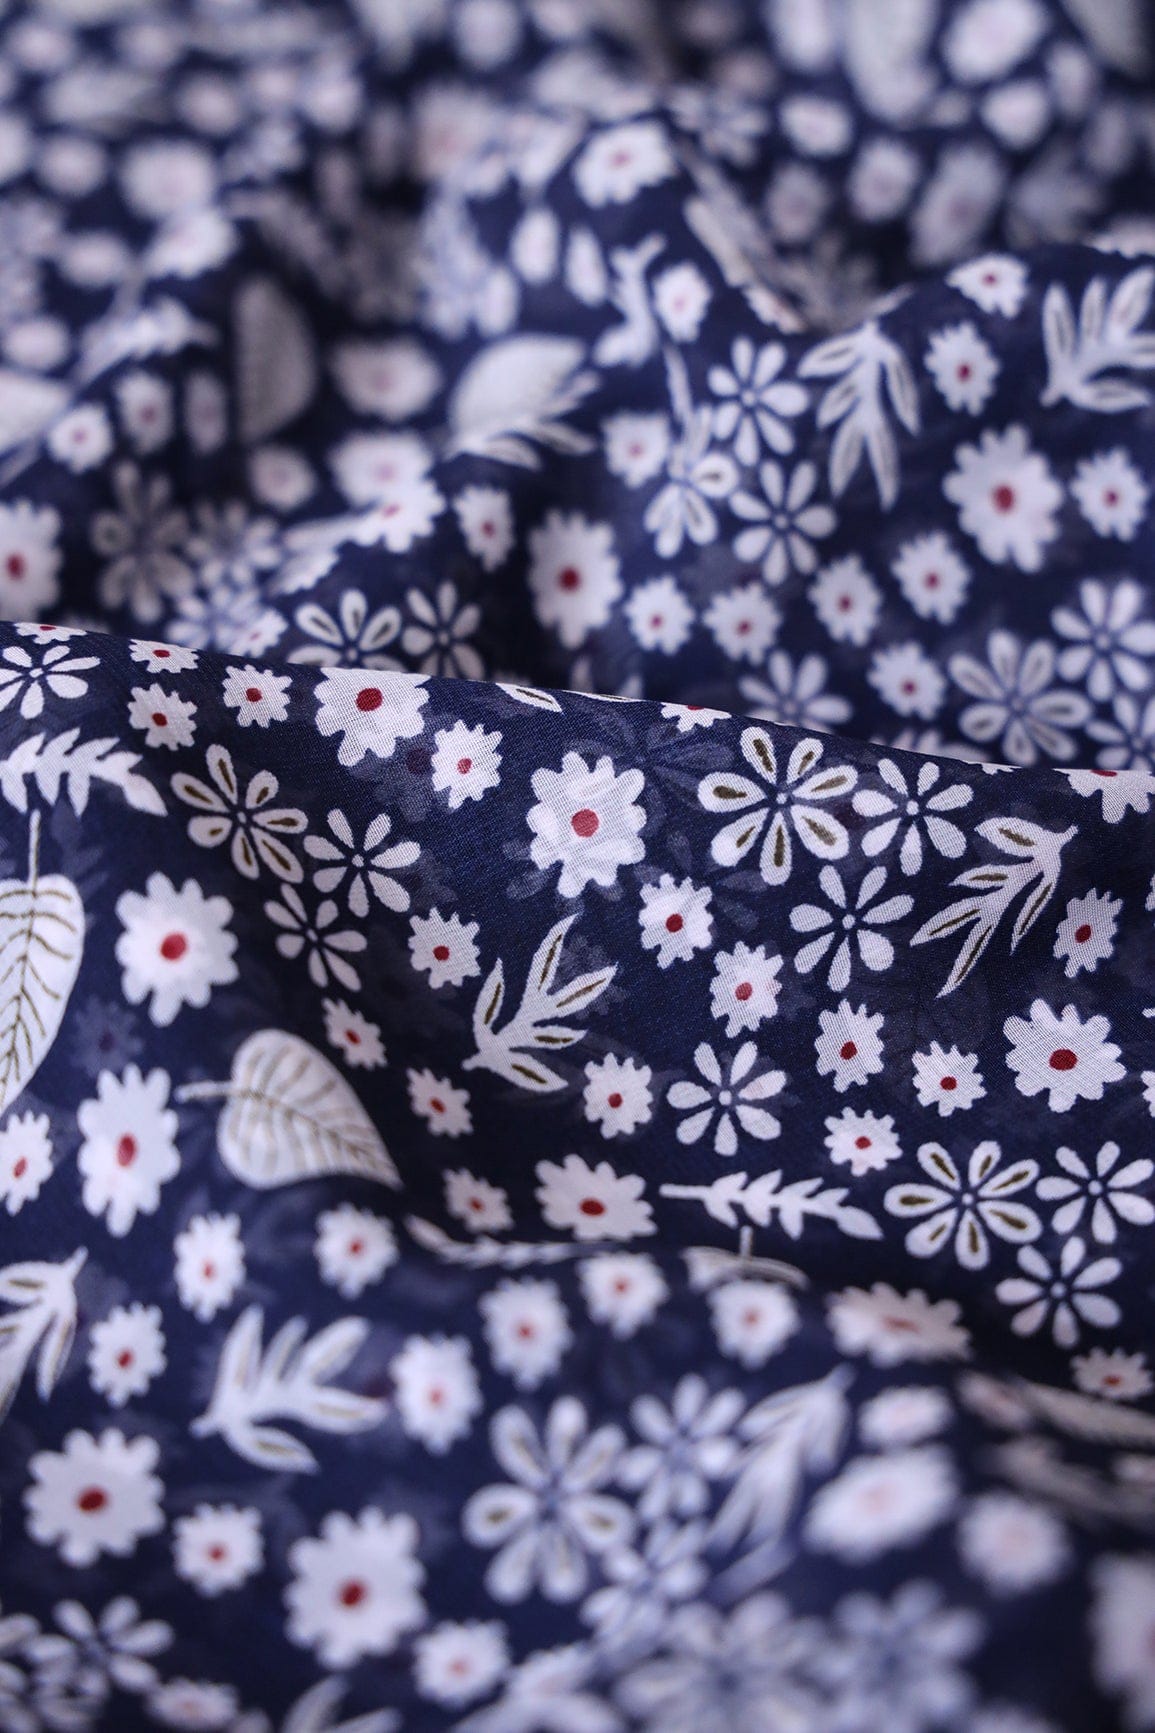 doeraa Prints Big Width "56" White Small Floral Digital Print On Navy Blue Georgette Fabric